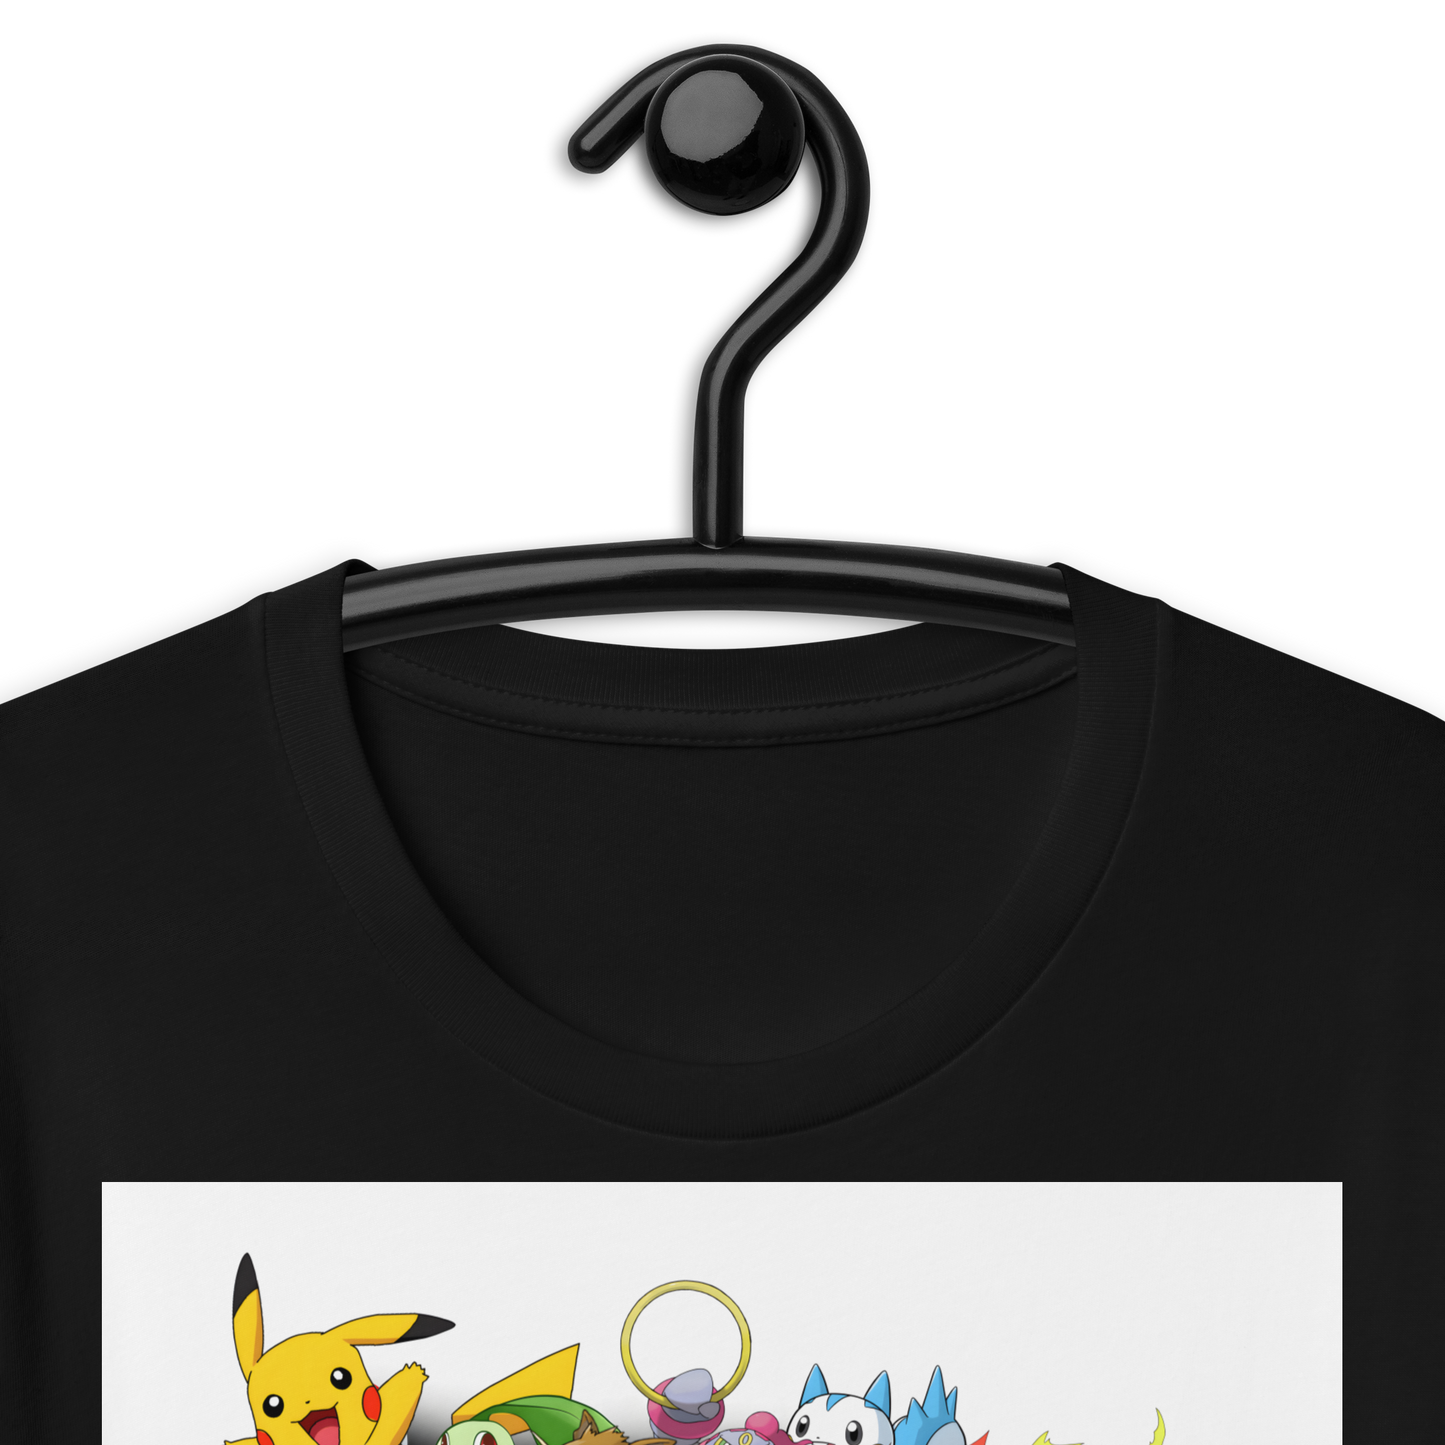 Pokemon Movie Unisex t-shirt